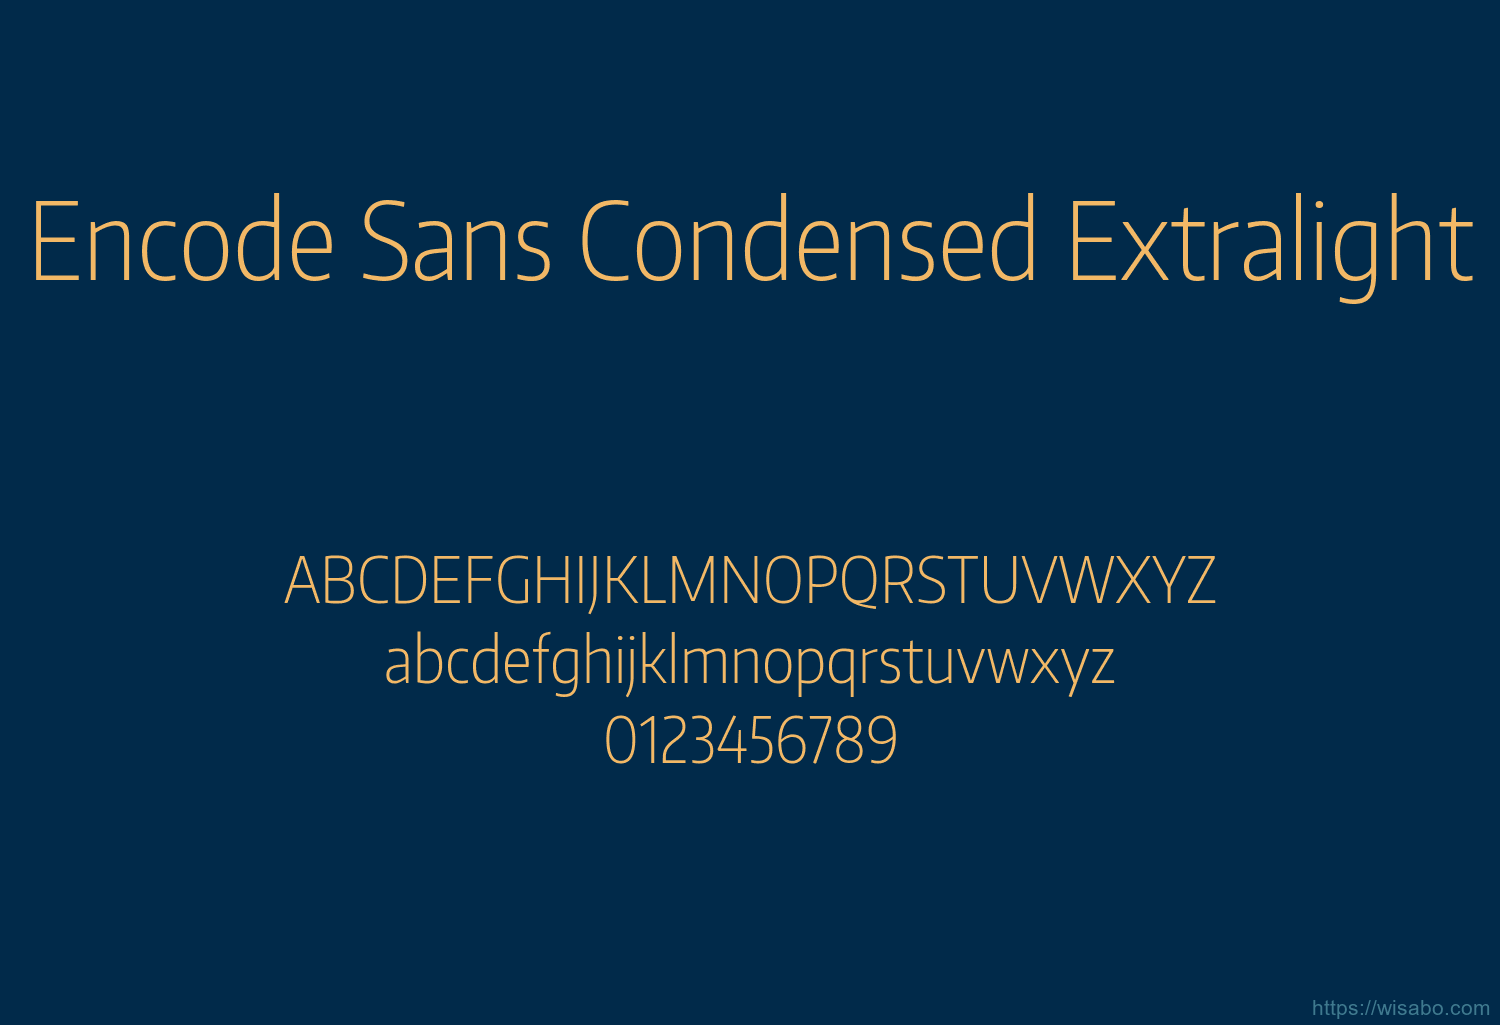 Encode Sans Condensed Extralight